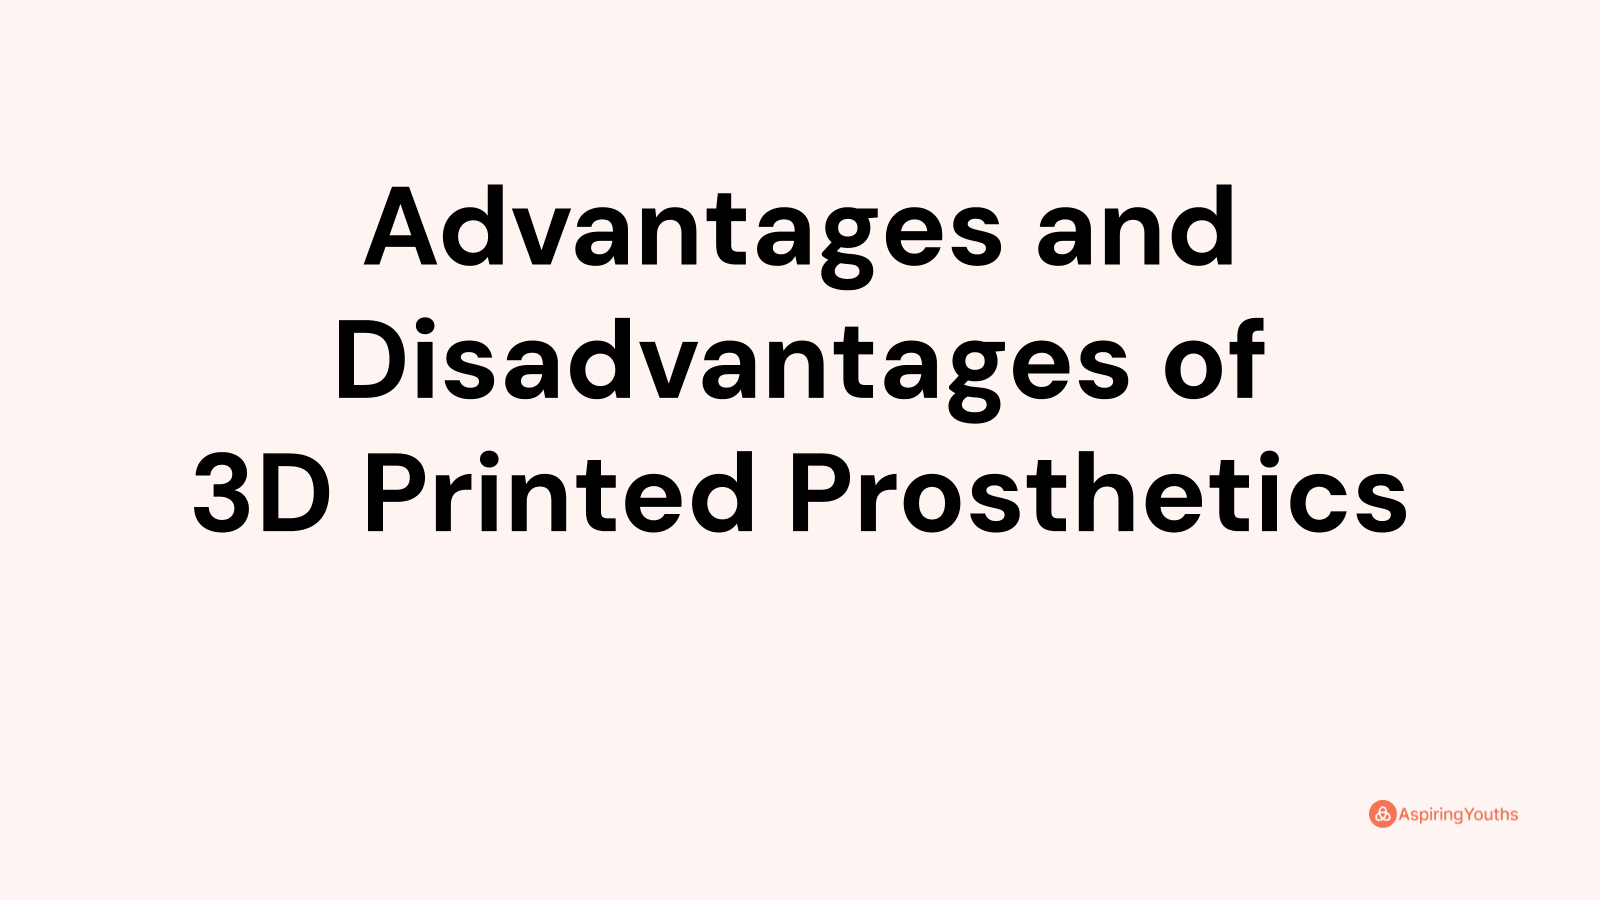 Advantages and disadvantages of 3D Printed Prosthetics